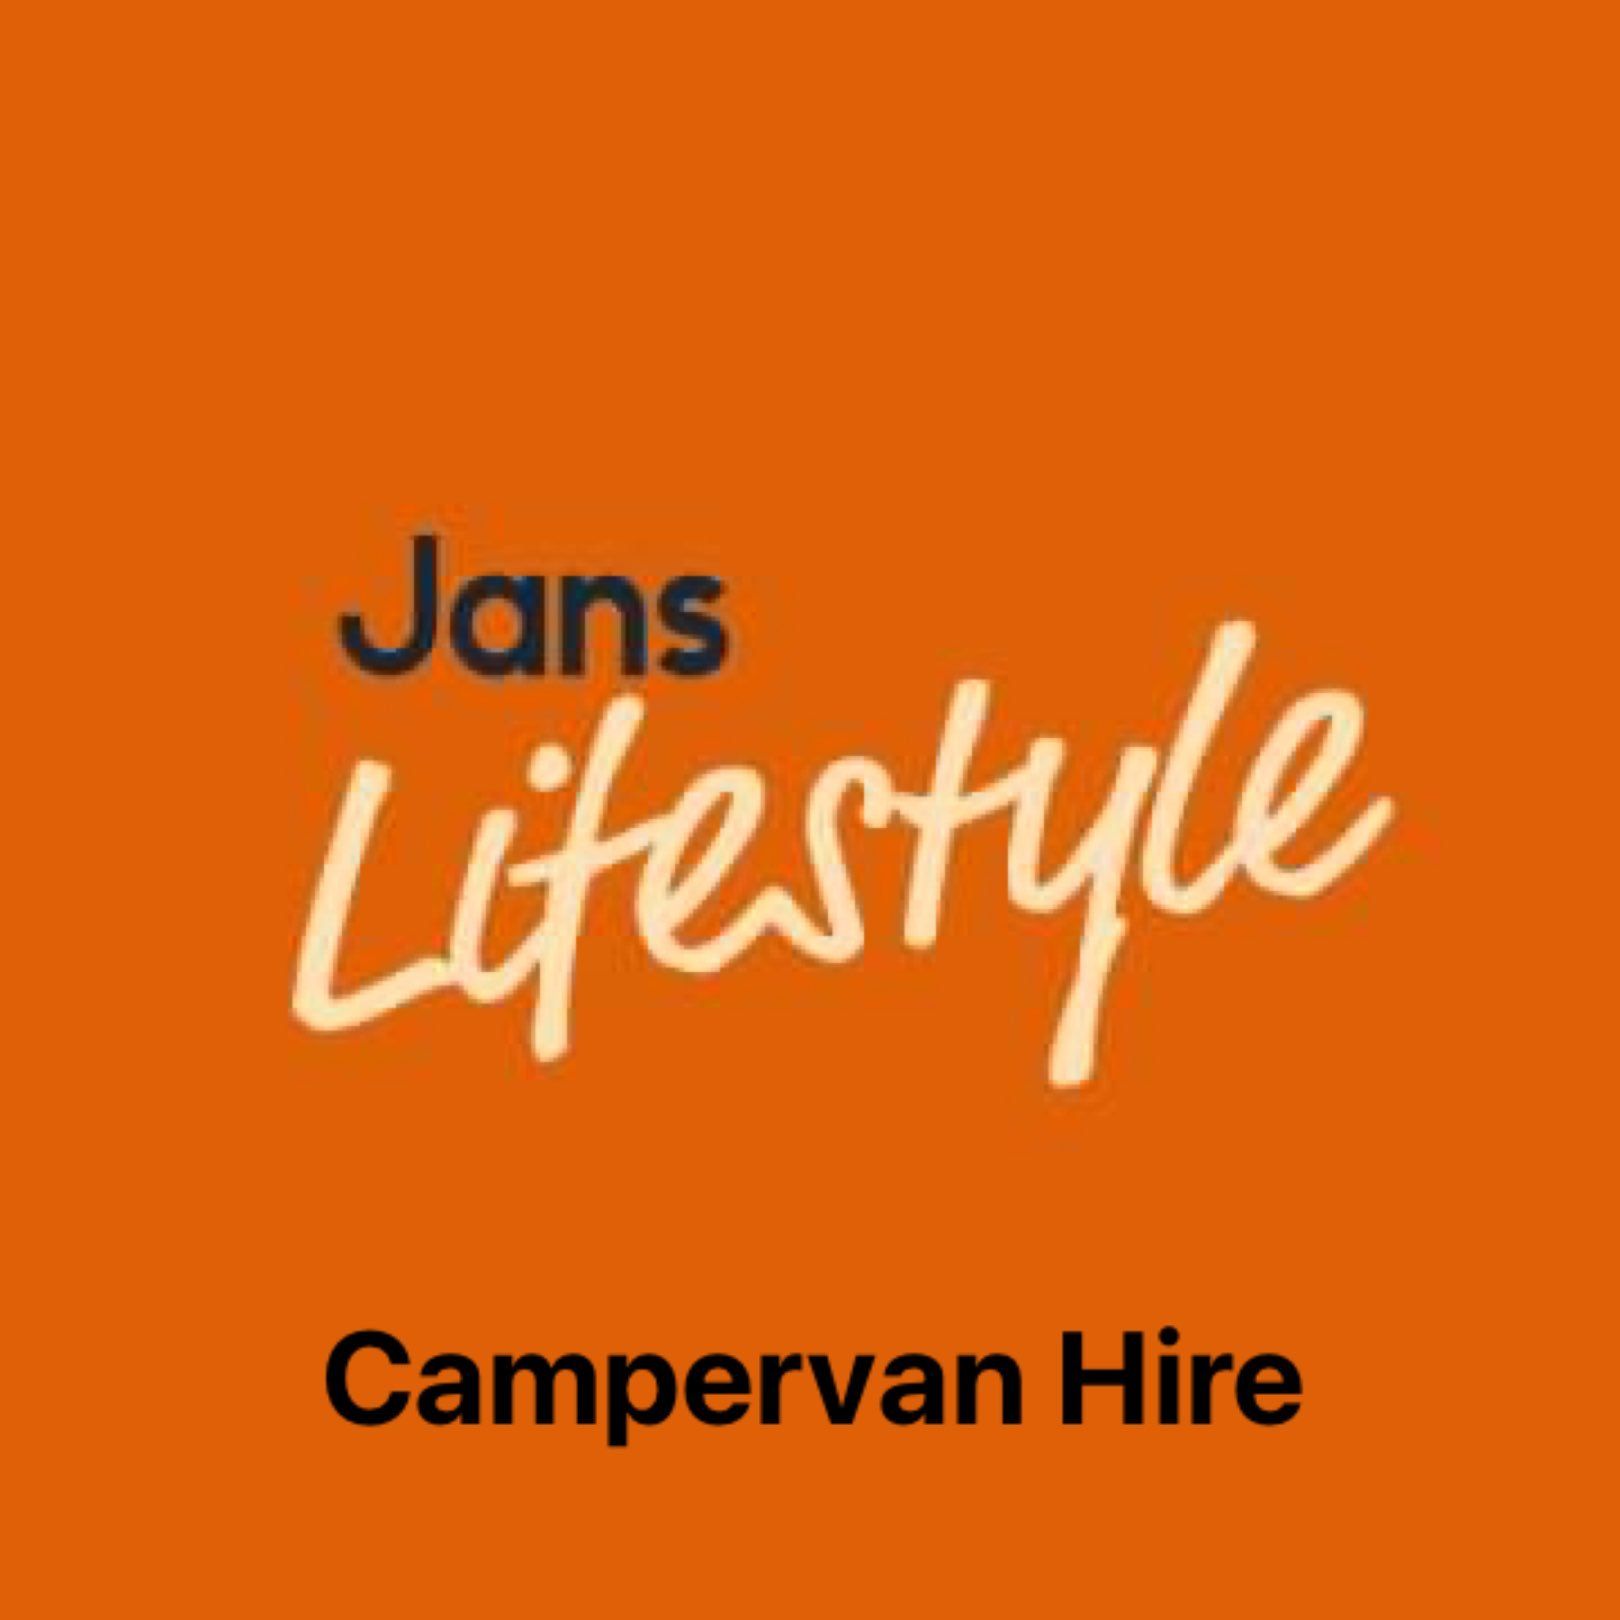 JANS Lifestyle Campervan Hire - CampingNI